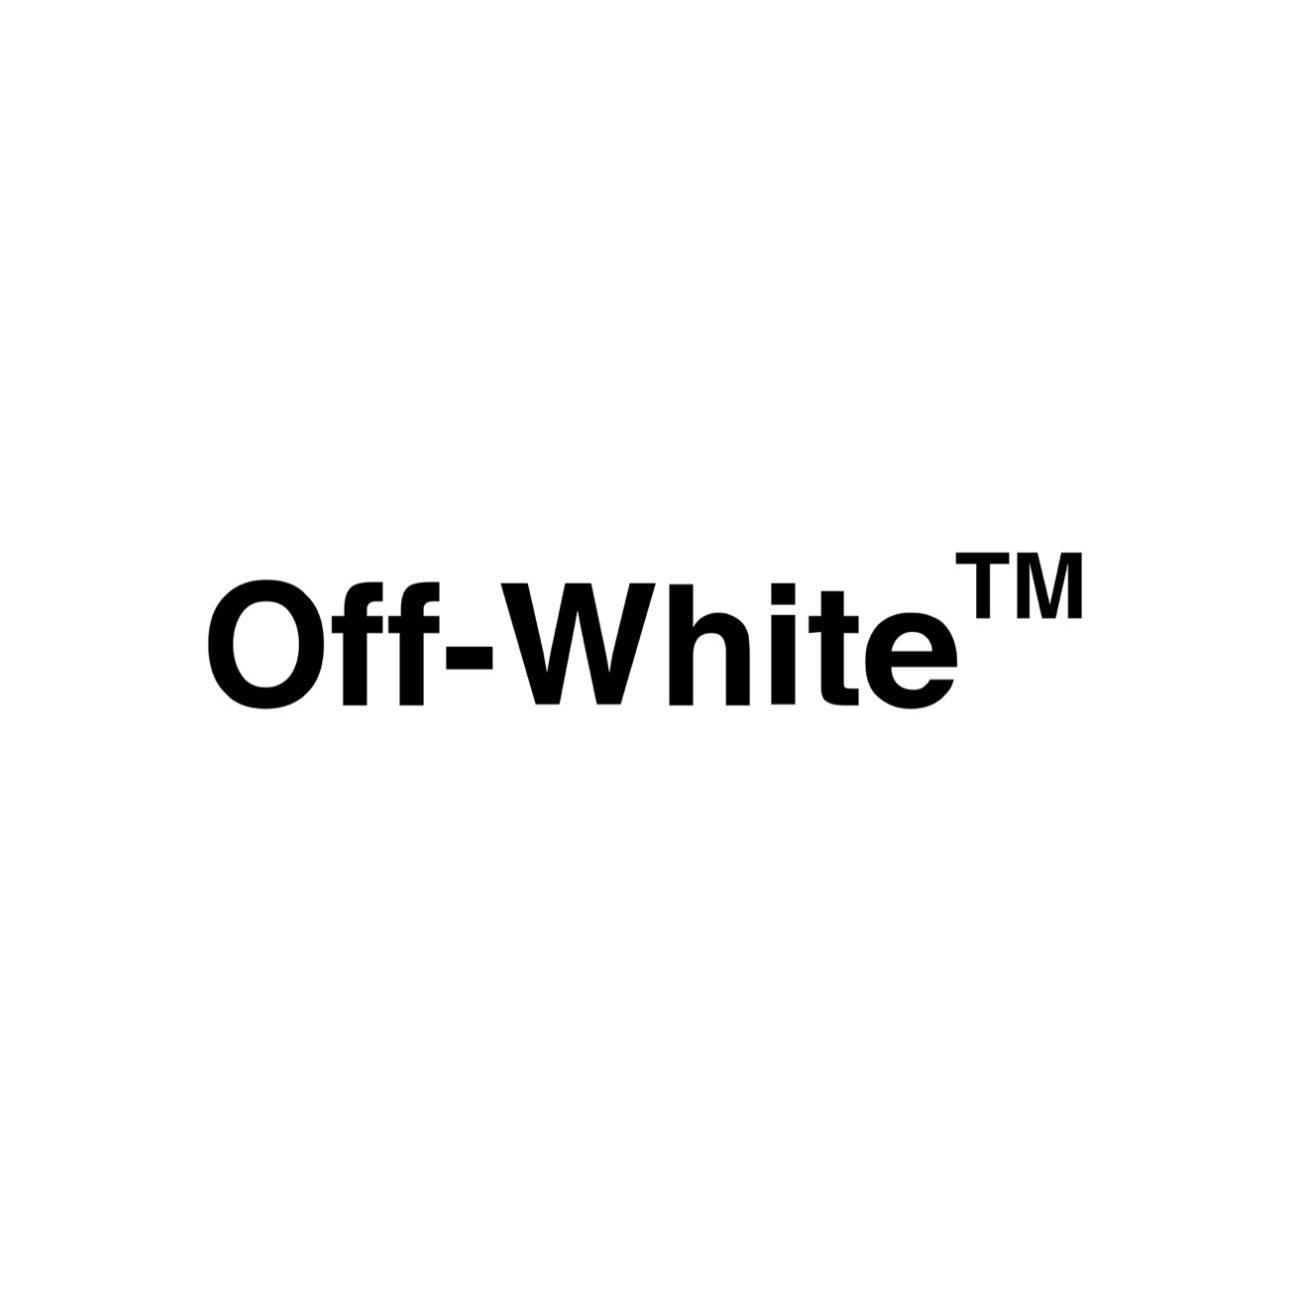 OFF-WHITE™